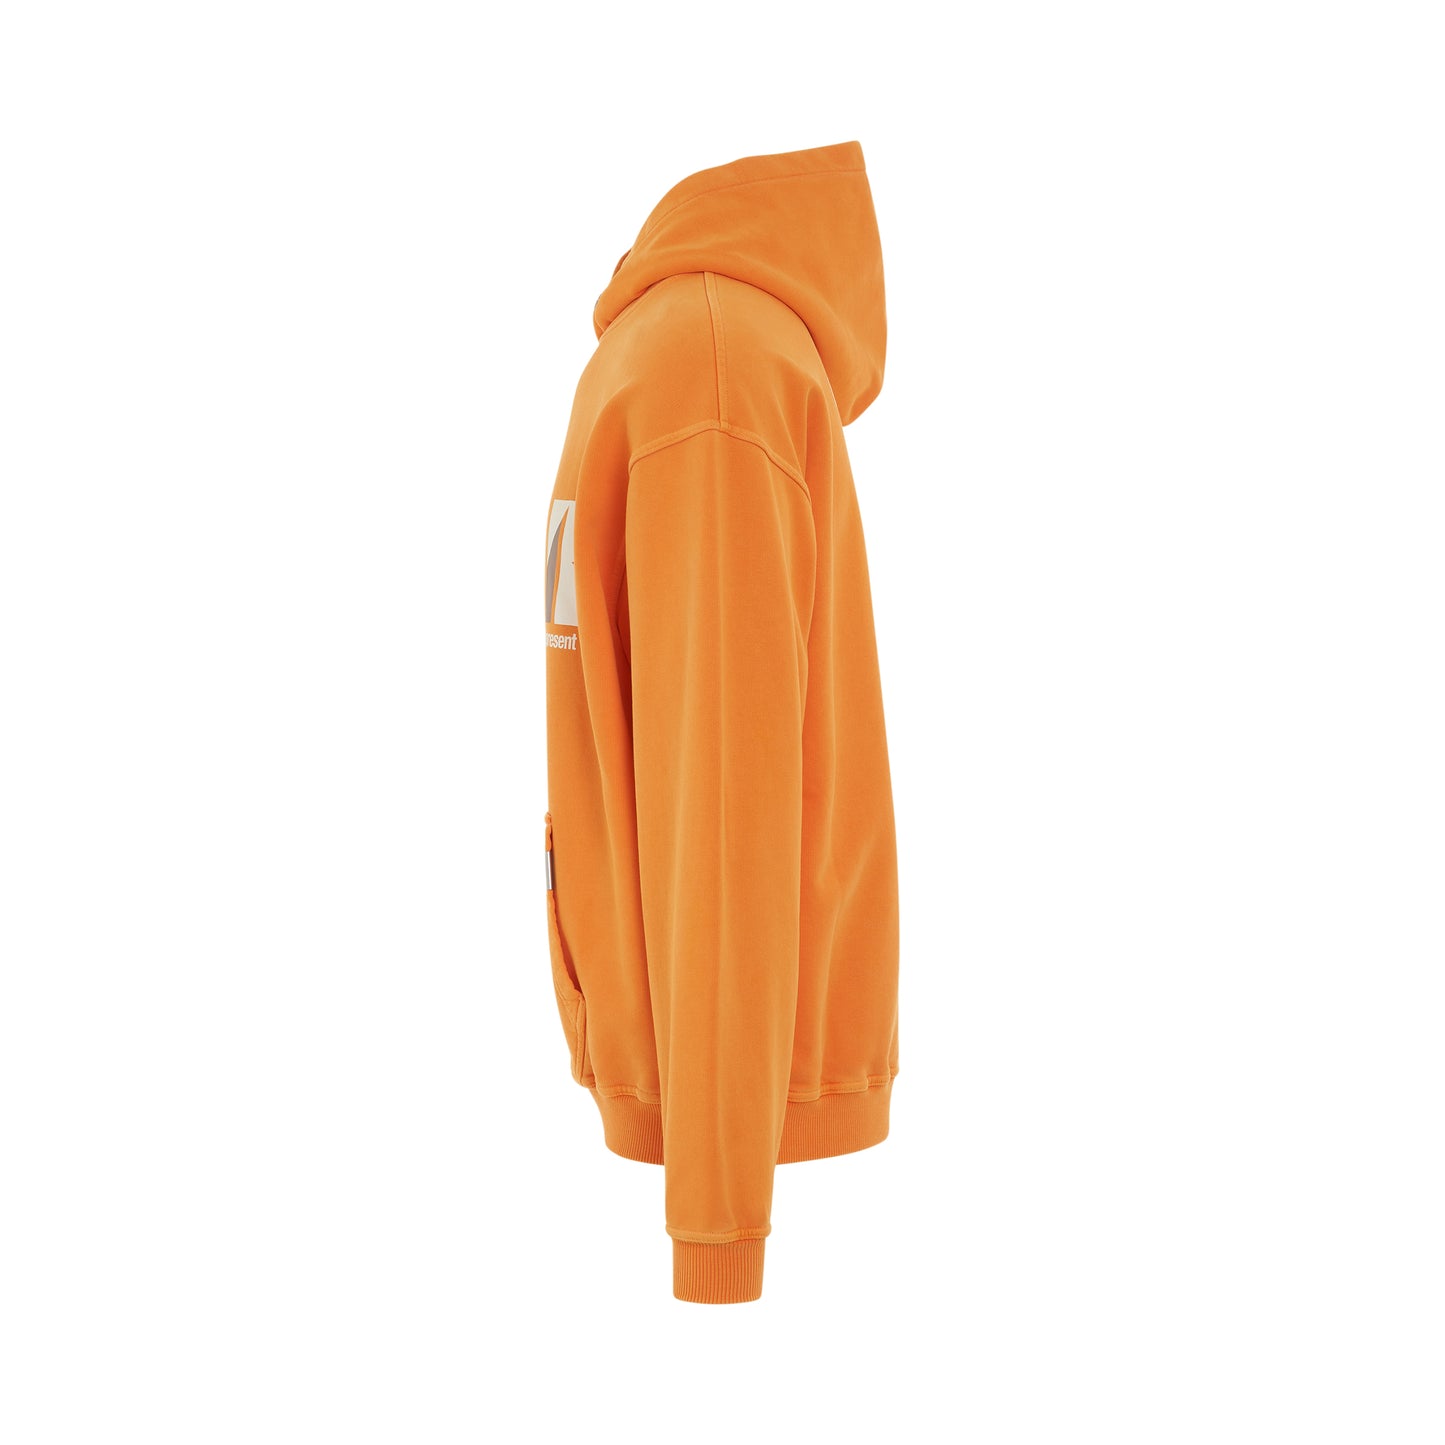 Decade of Speed Hoodie in Neon Orange